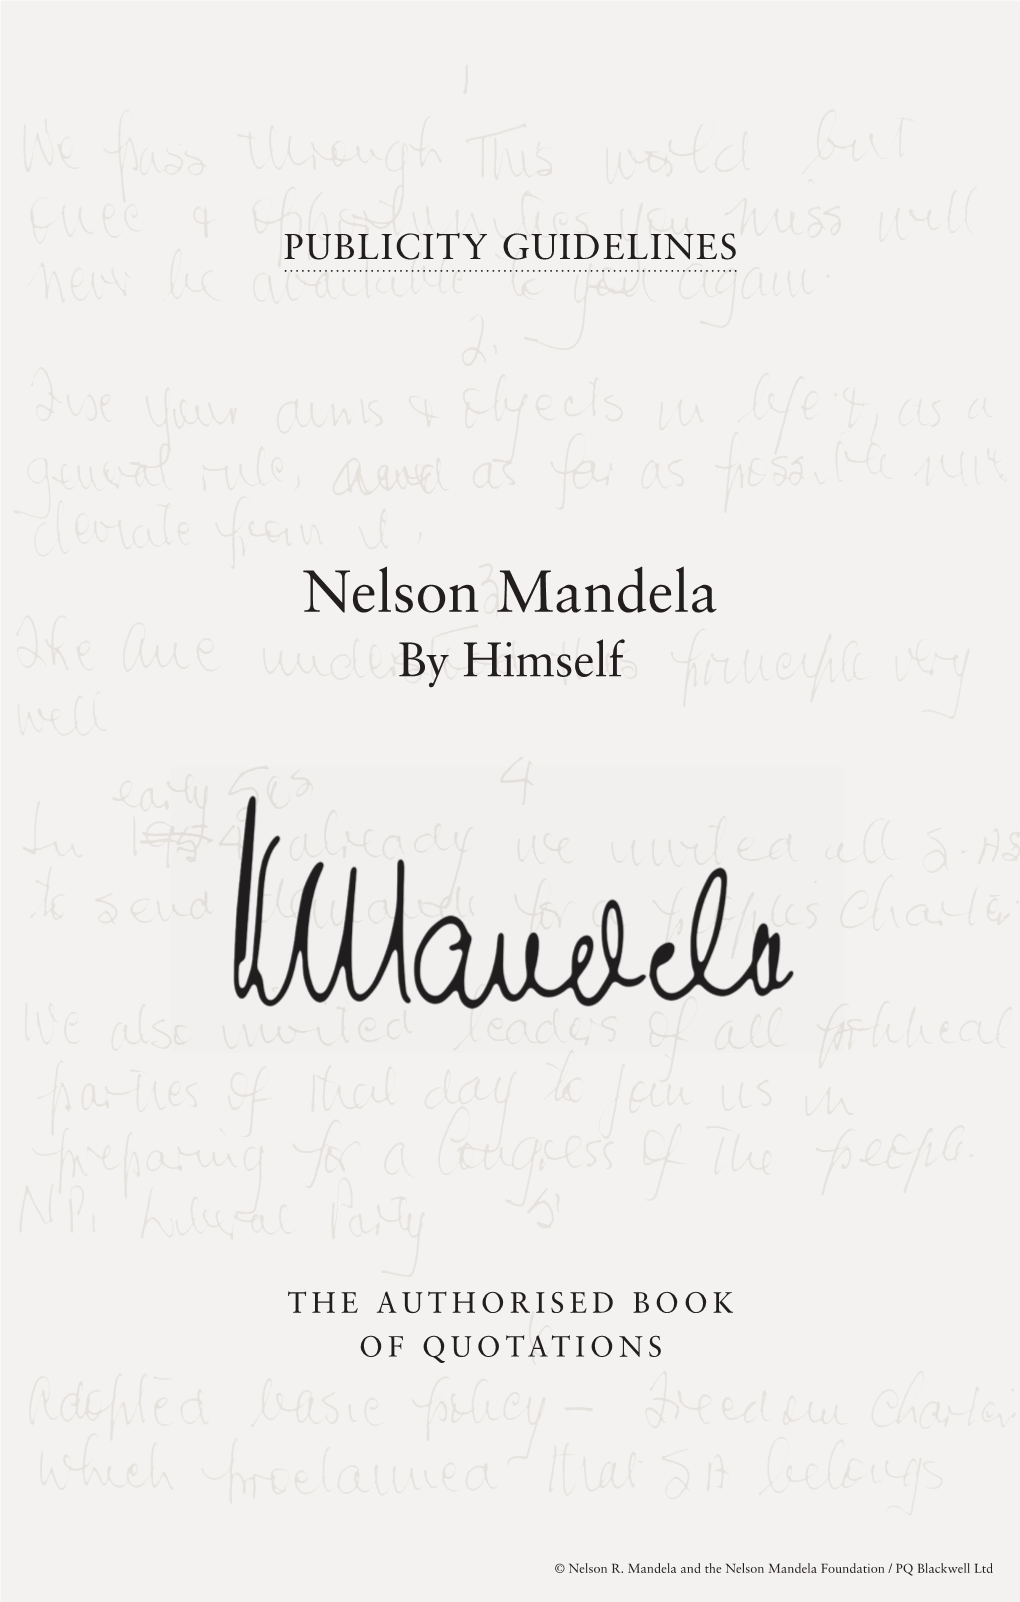 Nelson Mandela by Himself: Publicity Guidelines 2.1 MB (Pdf)